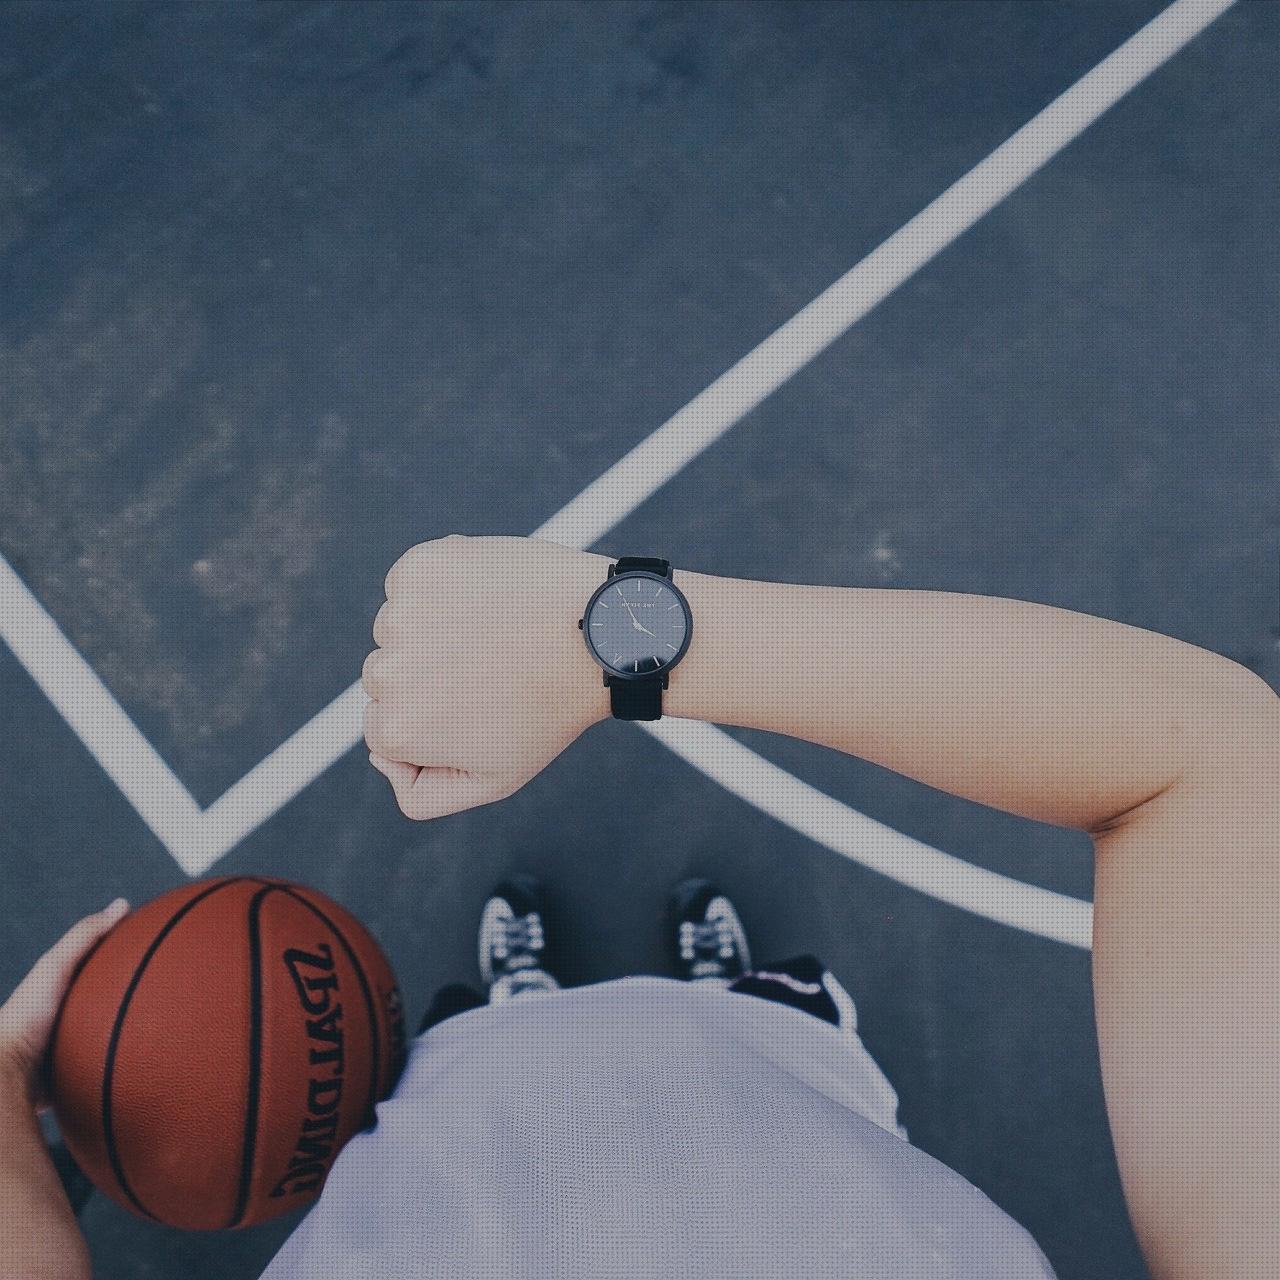 ¿Dónde poder comprar reloj deportivo amarillo hombre relojes deportivos relojes relojes hombre deportivos smarthphone?